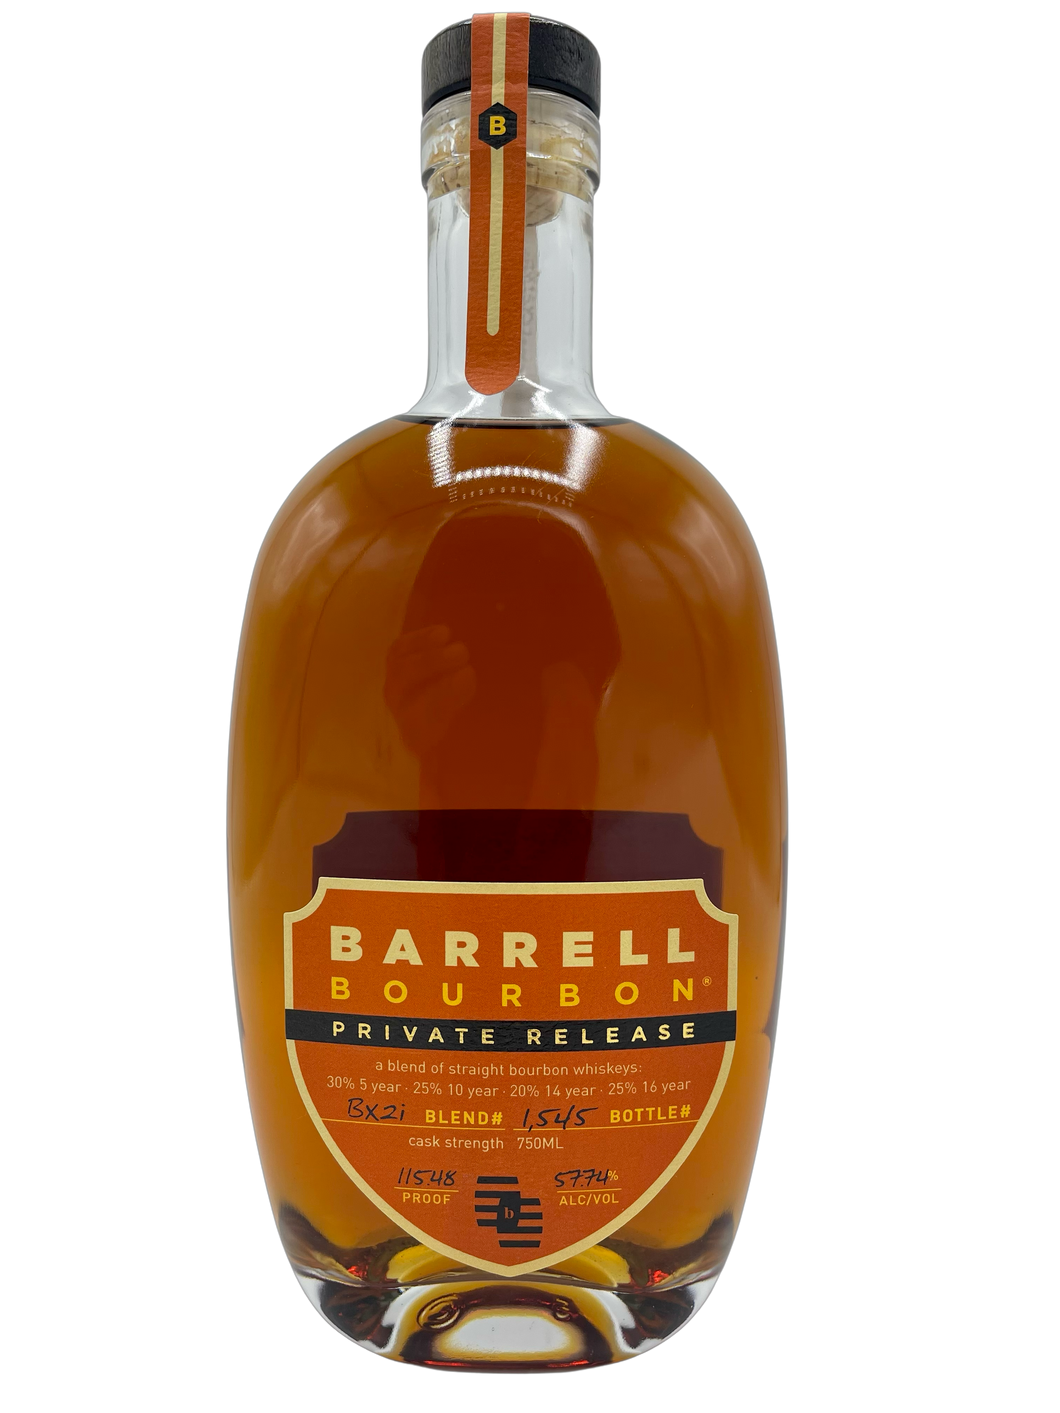 Barrell Private Release Bx2i Bourbon